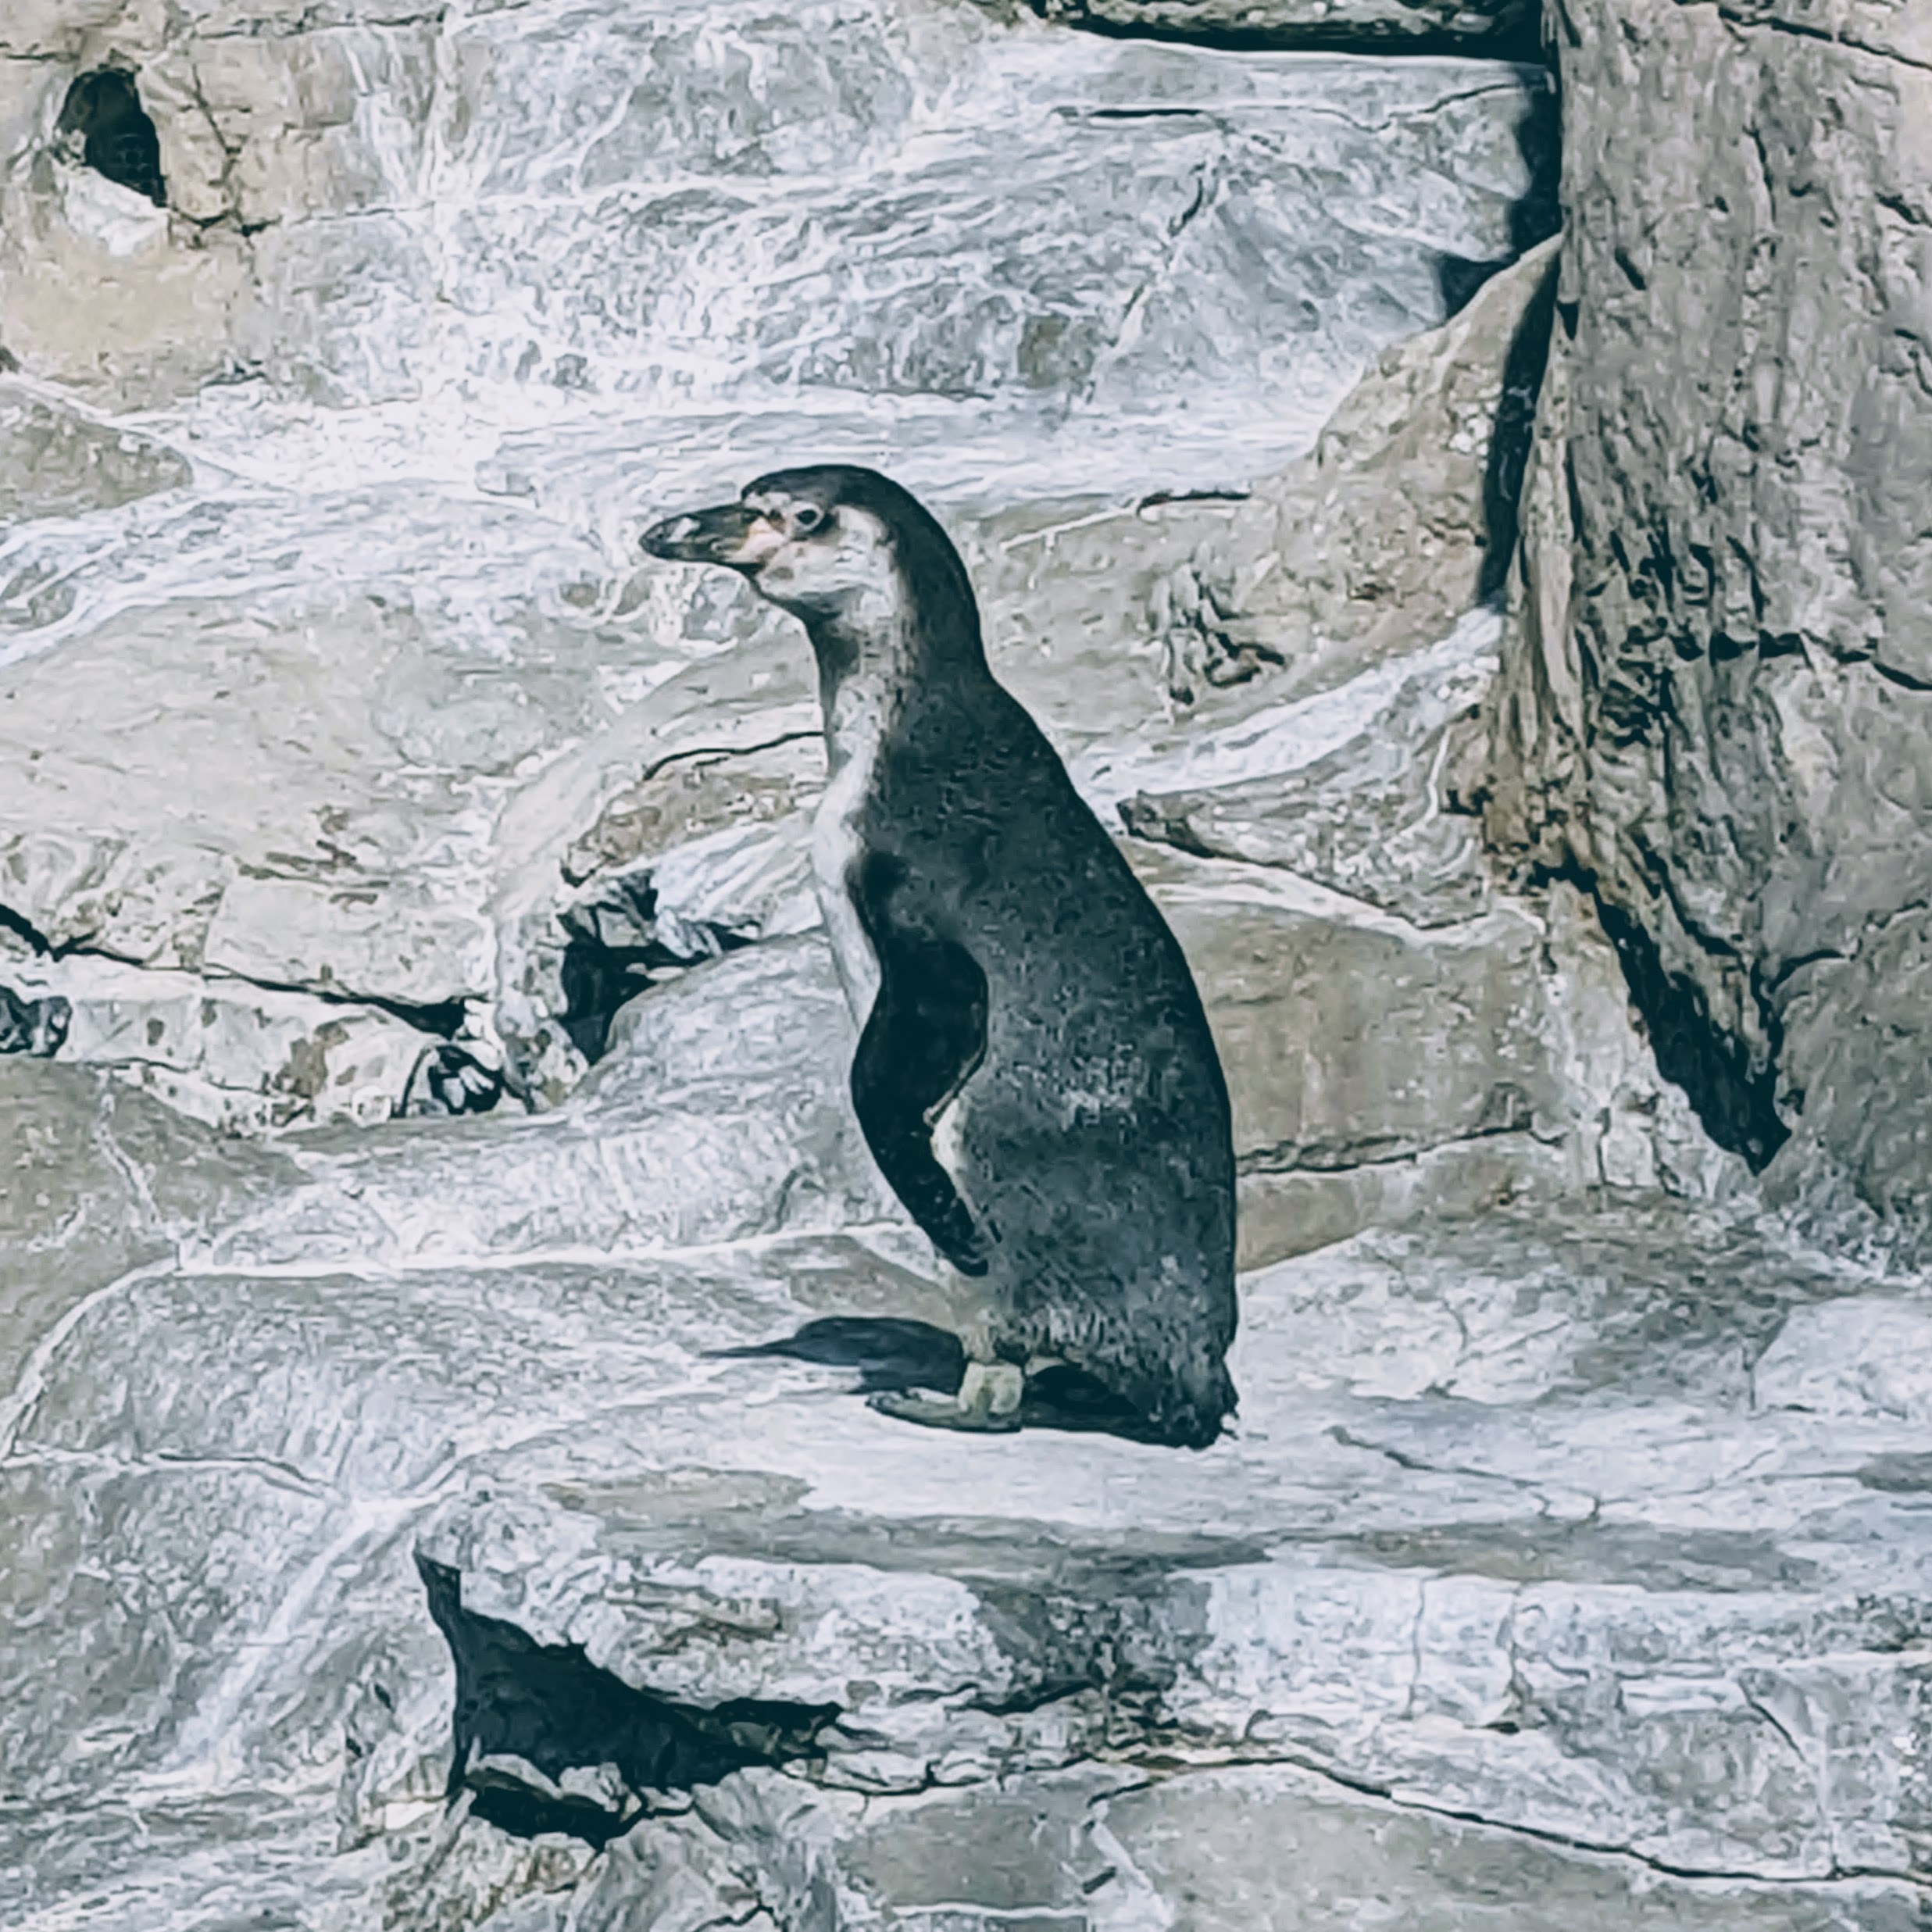 A photo of a Humboldt Penguin